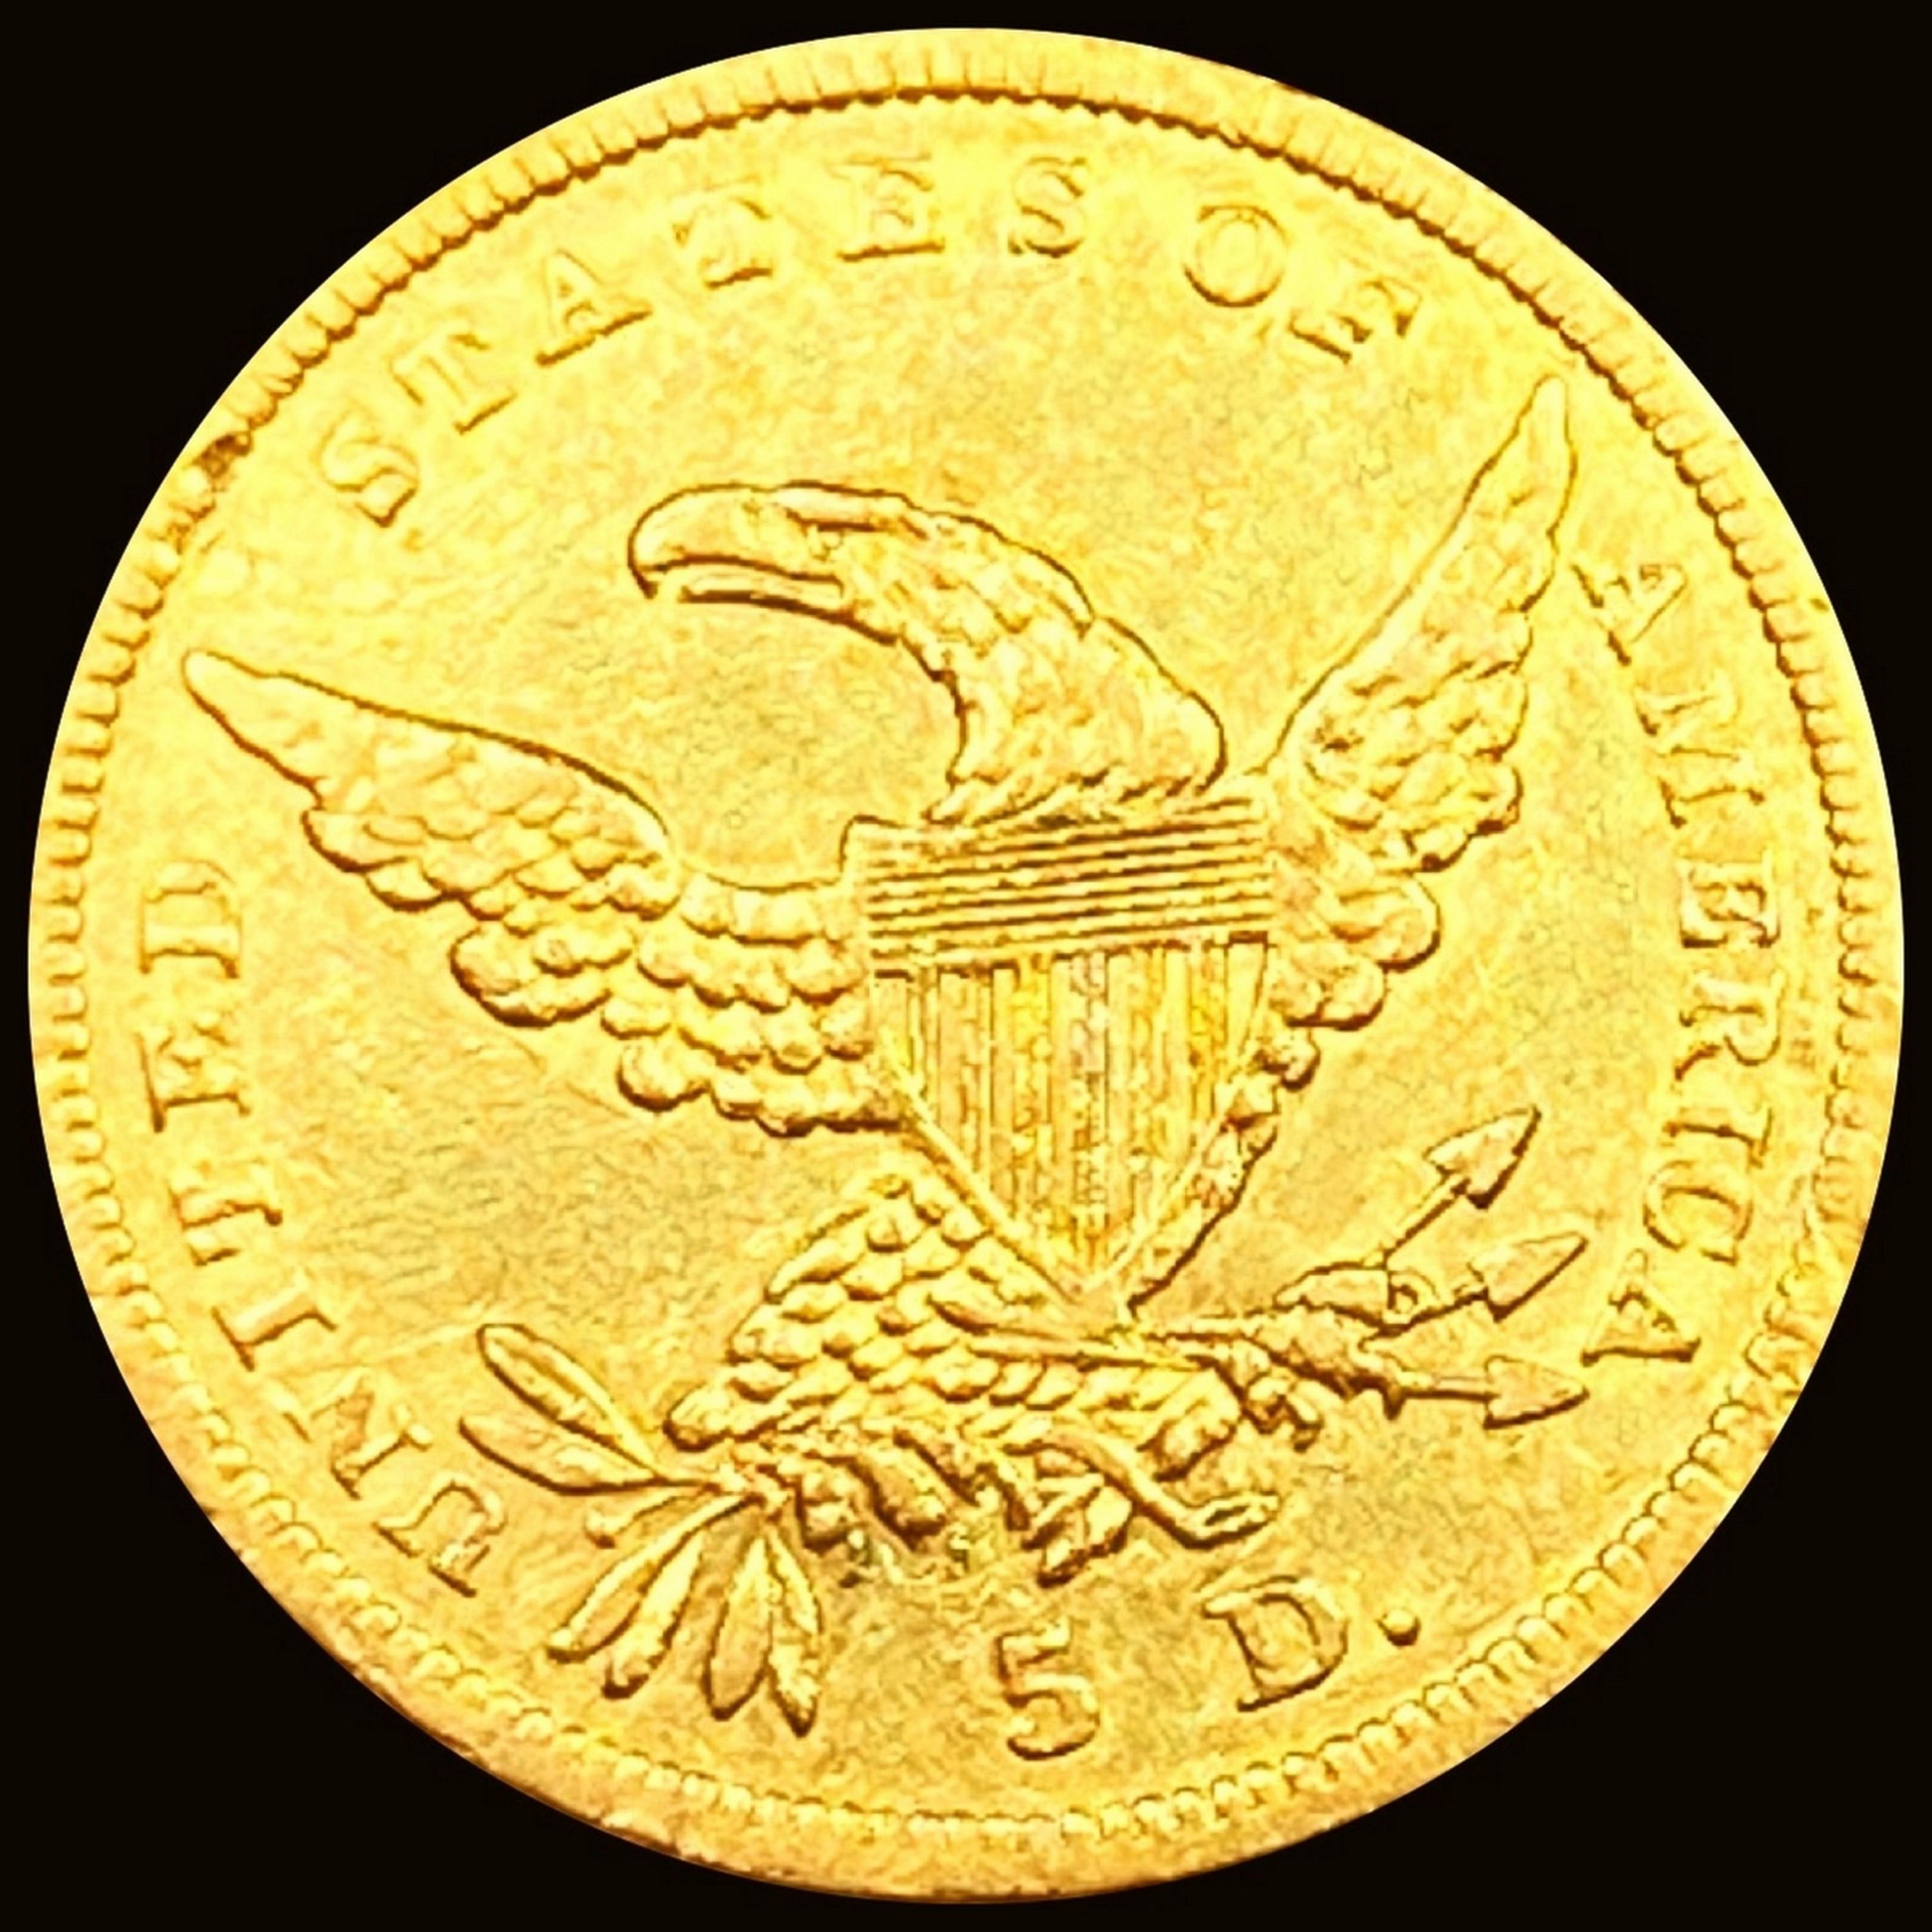 1838 $5 Gold Half Eagle UNCIRCULATED